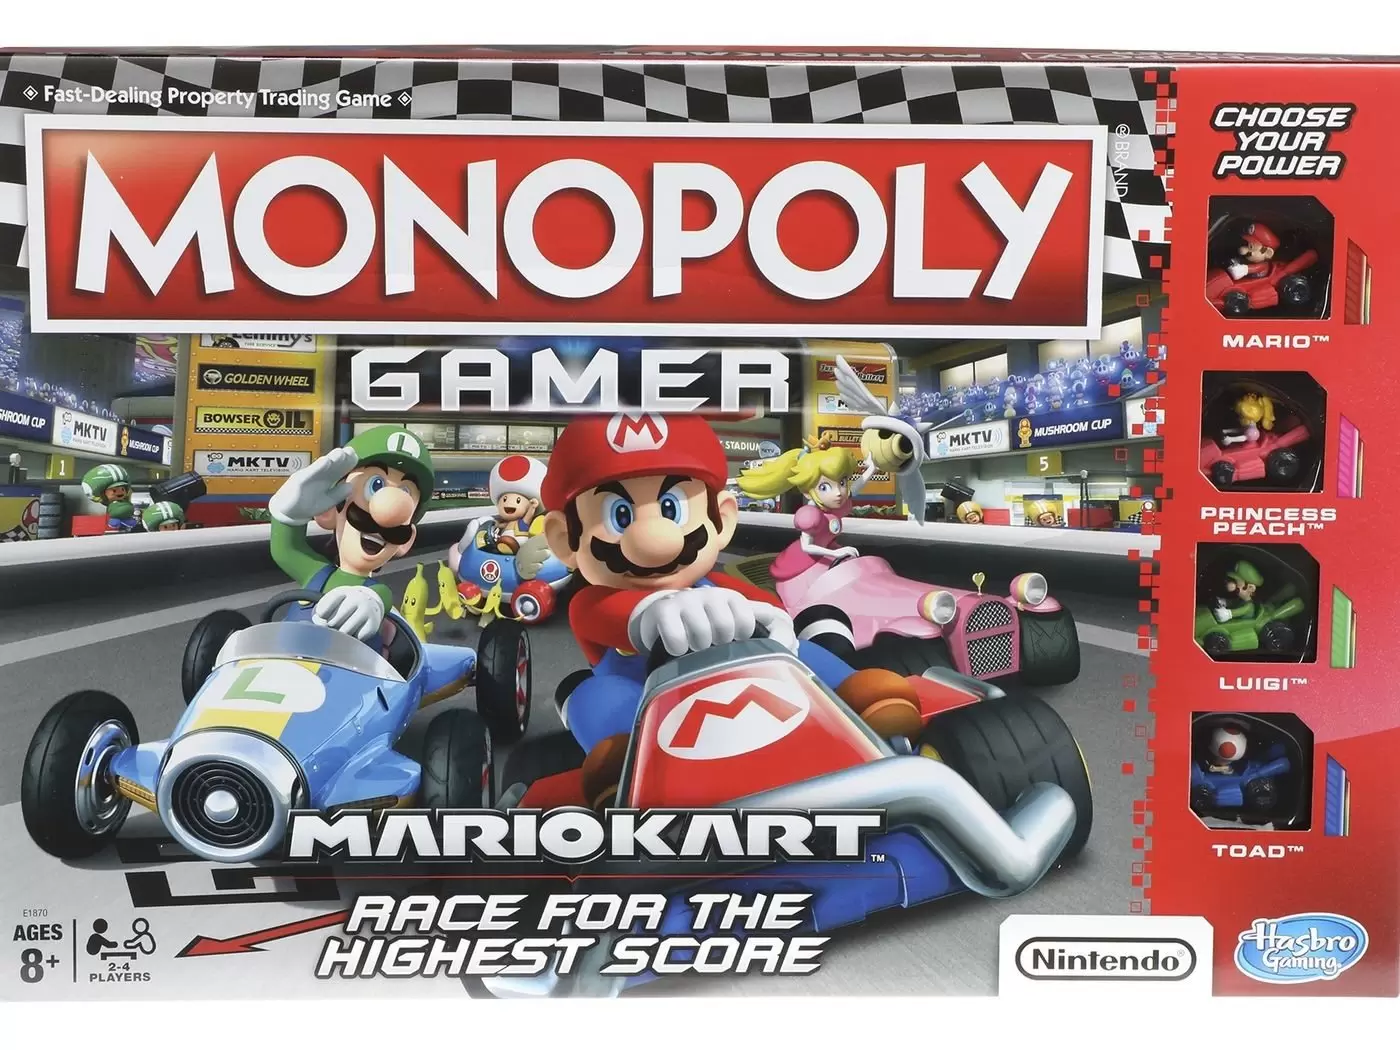 Monopoly Video Games - Monopoly Gamer - Mario Kart